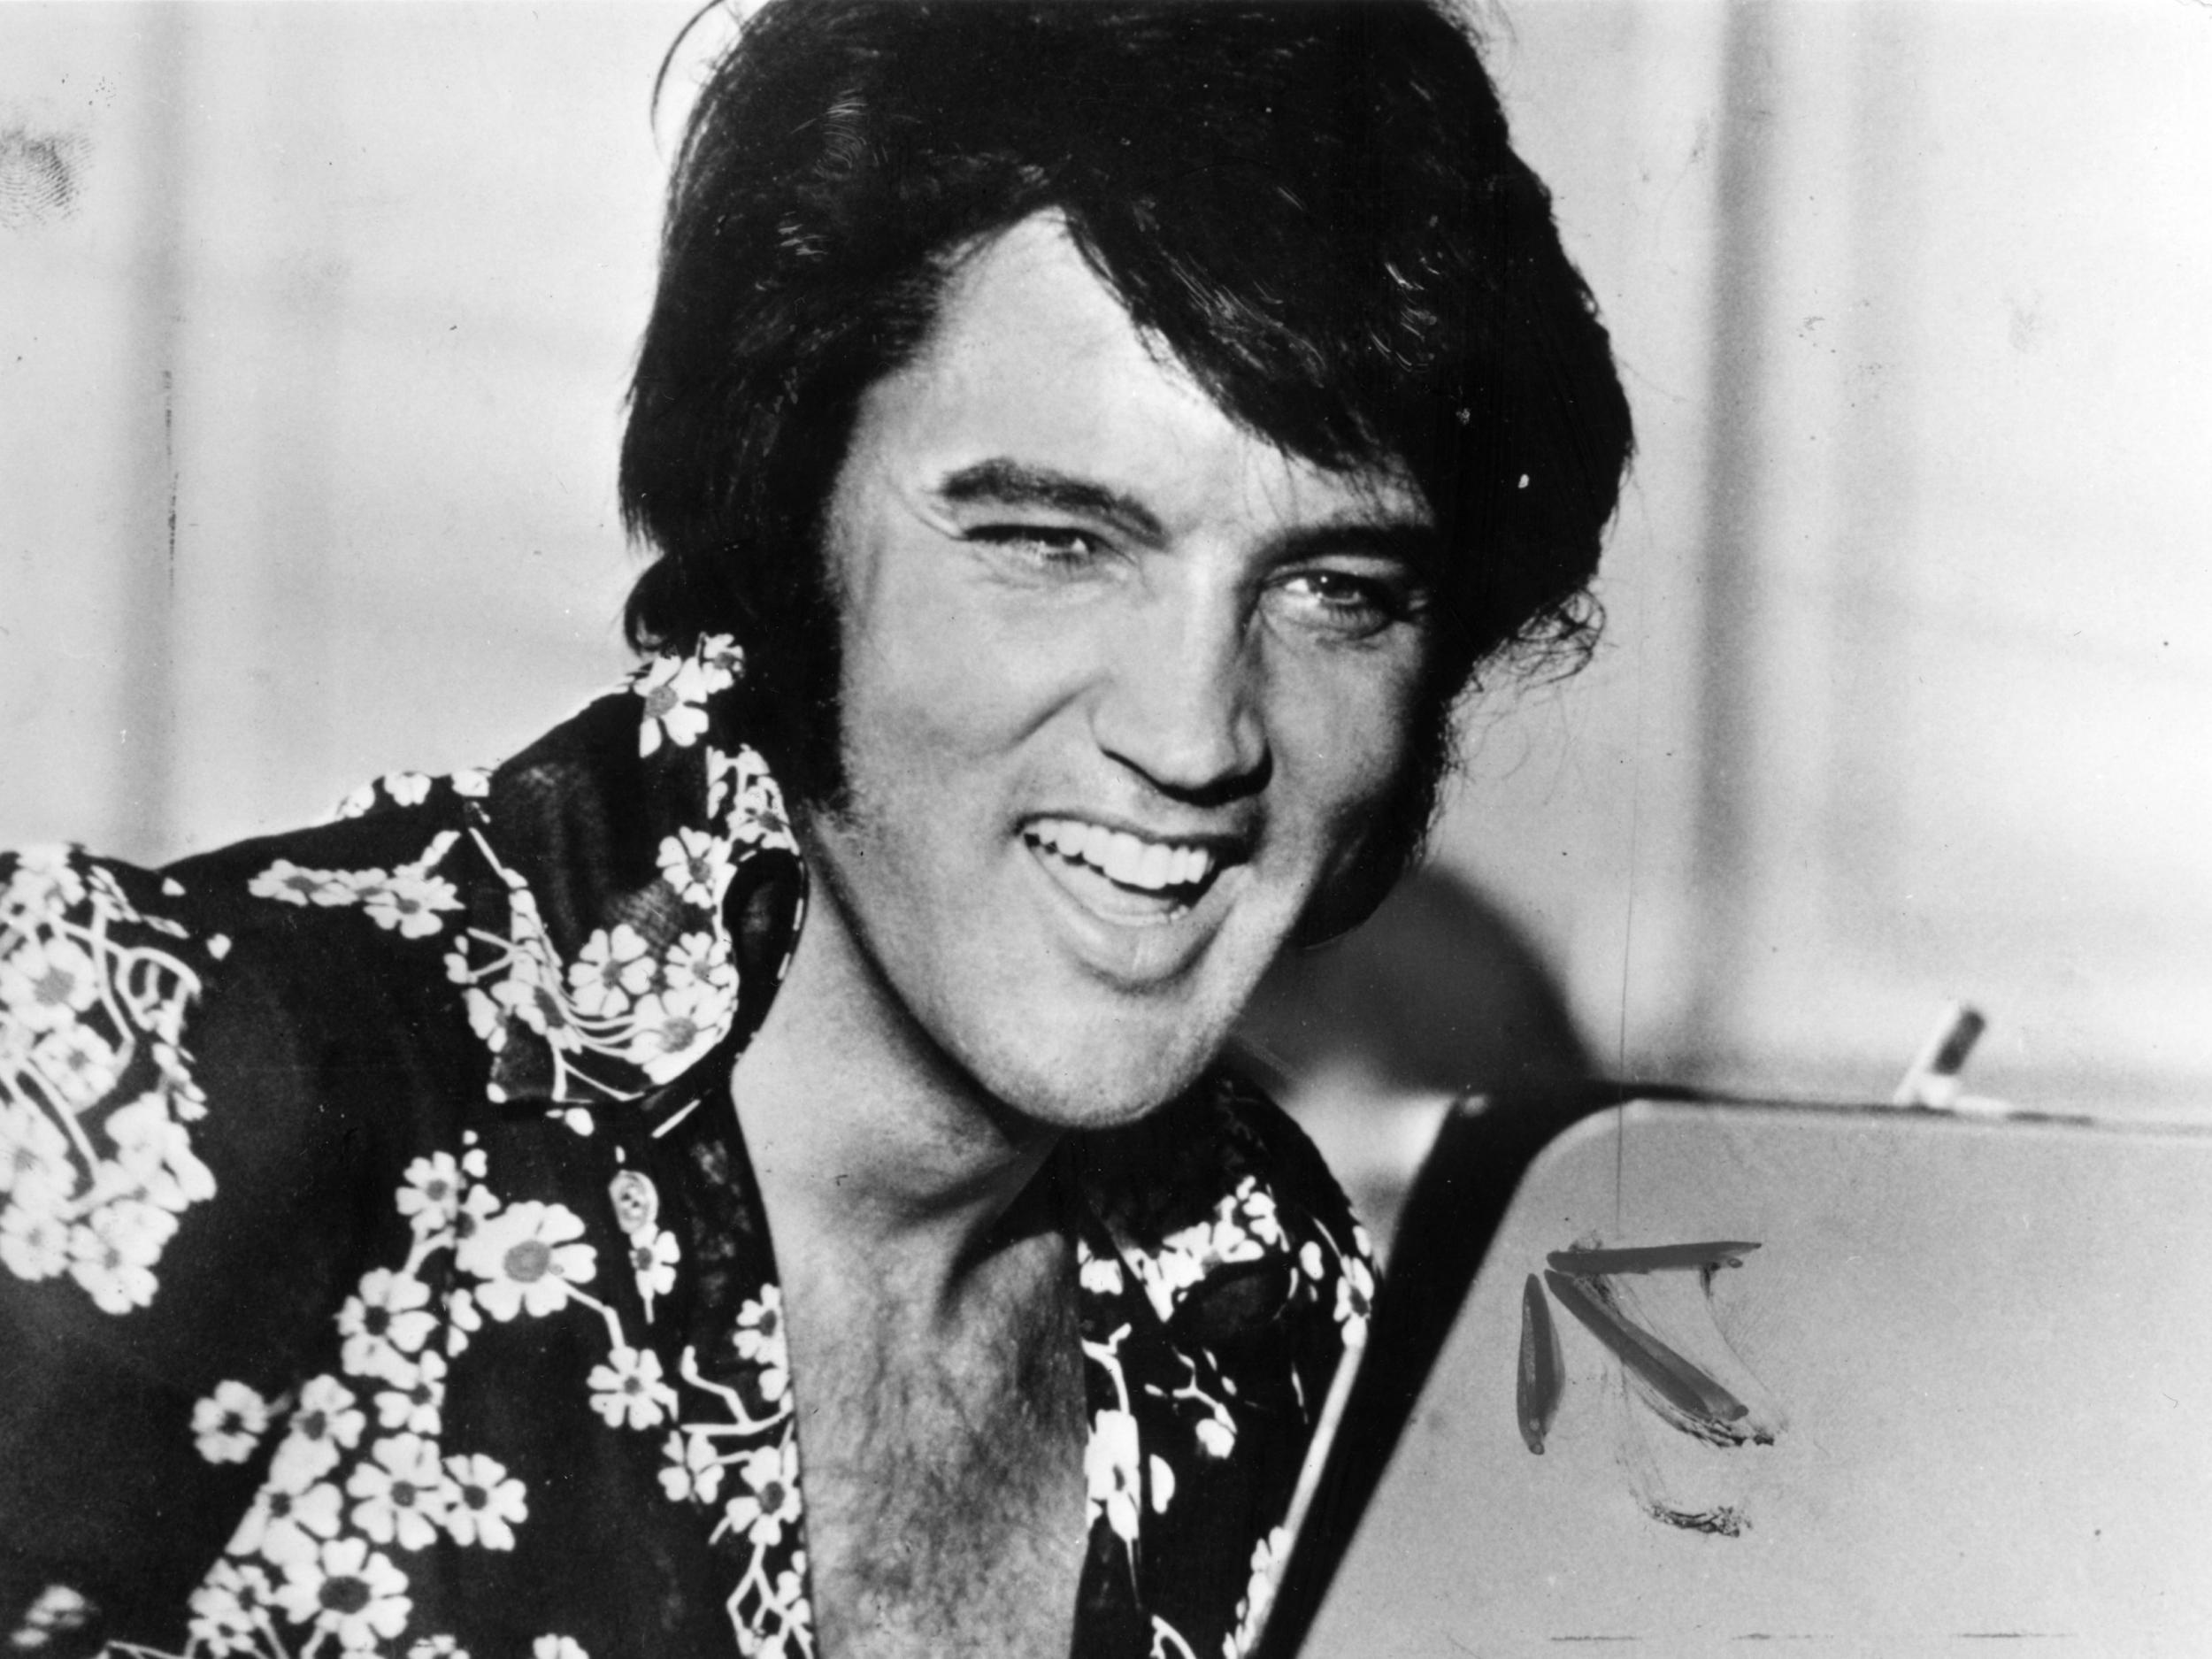 Elvis Presley played his final ever concert in 1977